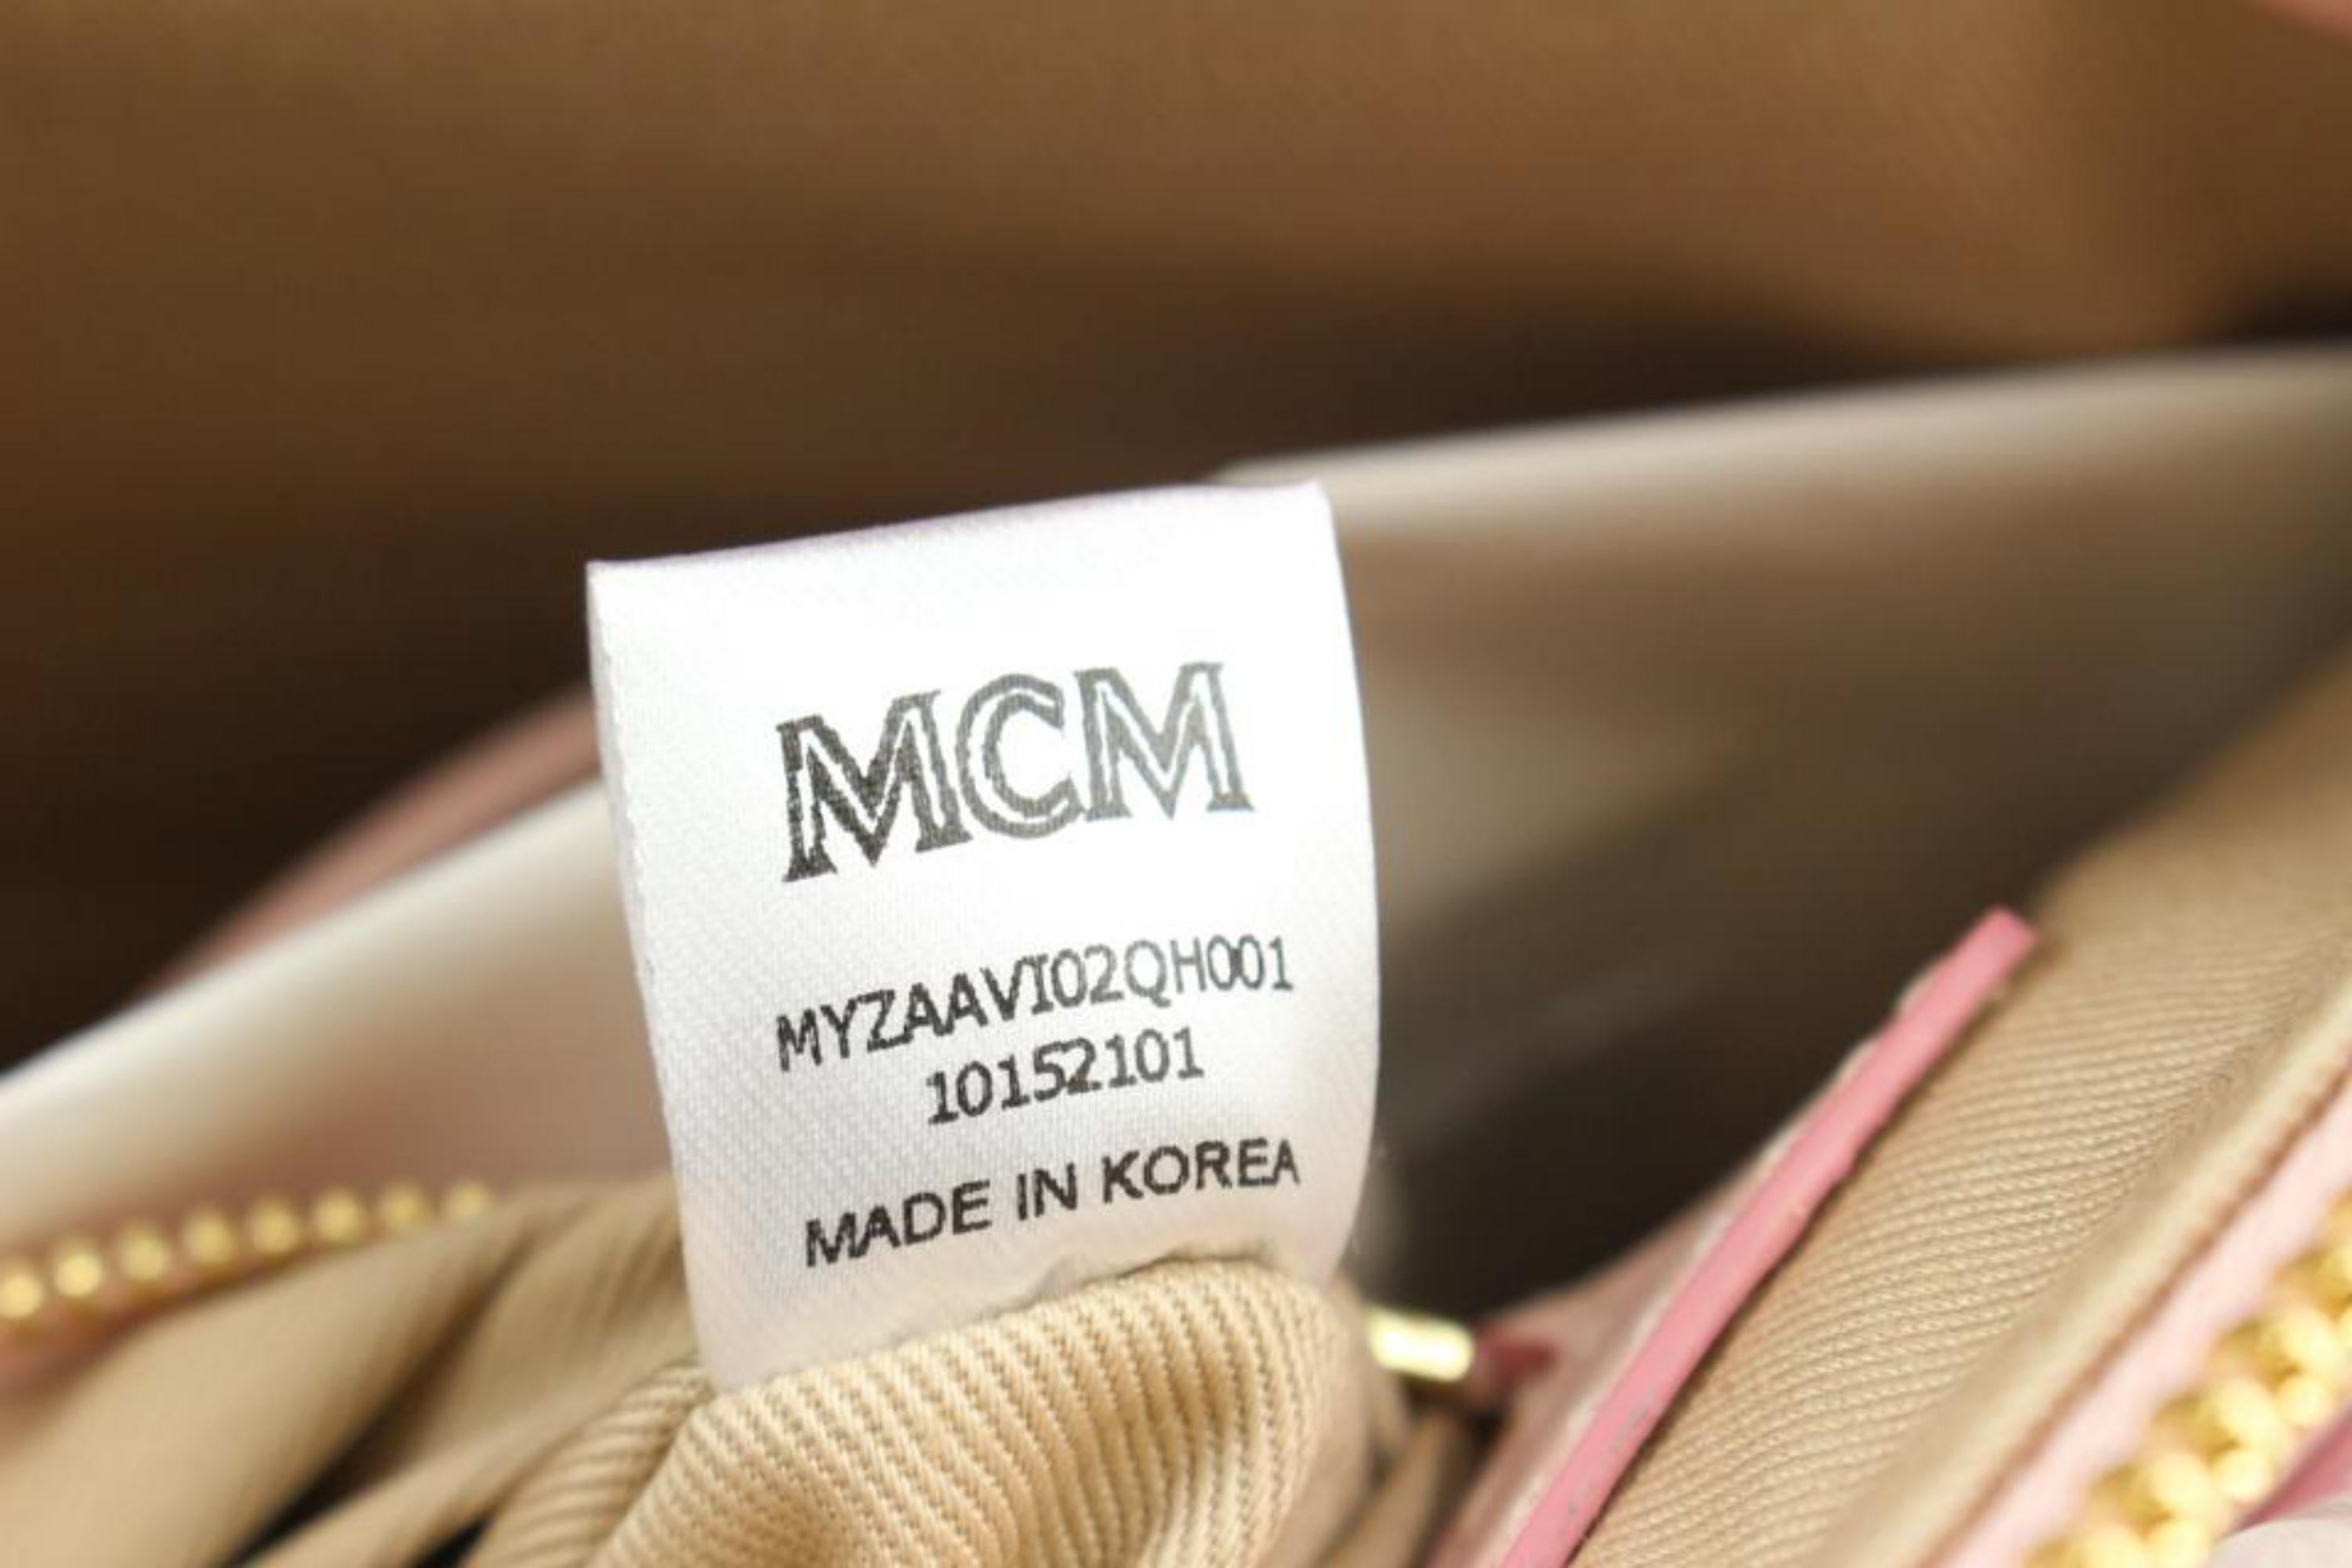 MCM Powder Pink Monogram Visetos Logo Pochette Crossbody Pouch 121m63
Date Code/Serial Number: MYZAAVI02QH001
Made In: Korea
Measurements: Length:  11.75